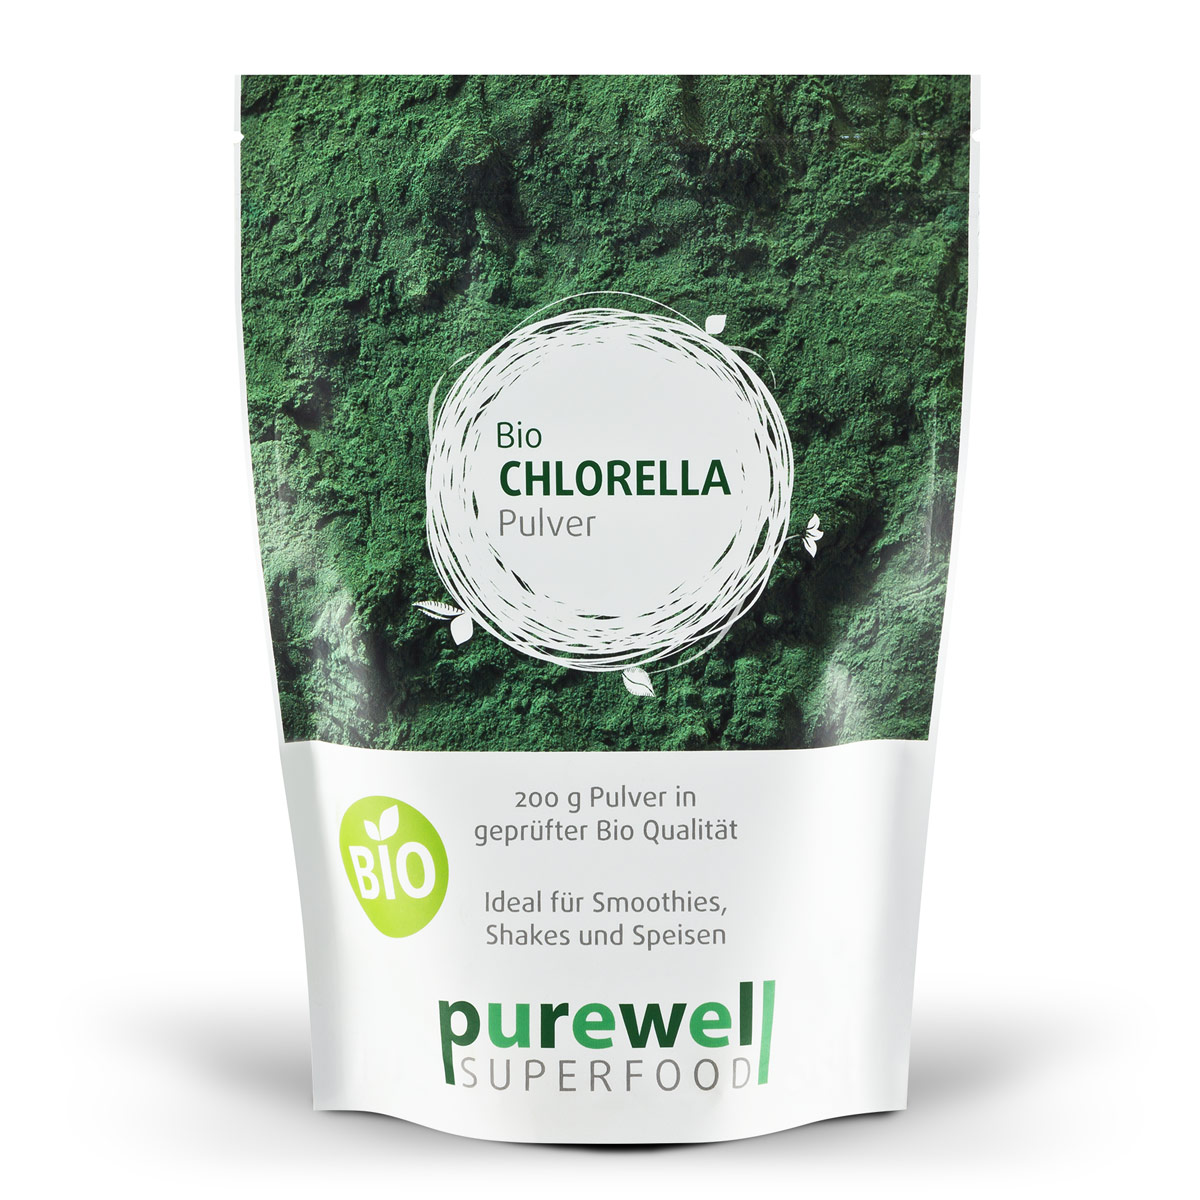 Produktverpackung CHLORELLA Pulver - Bio Superfood